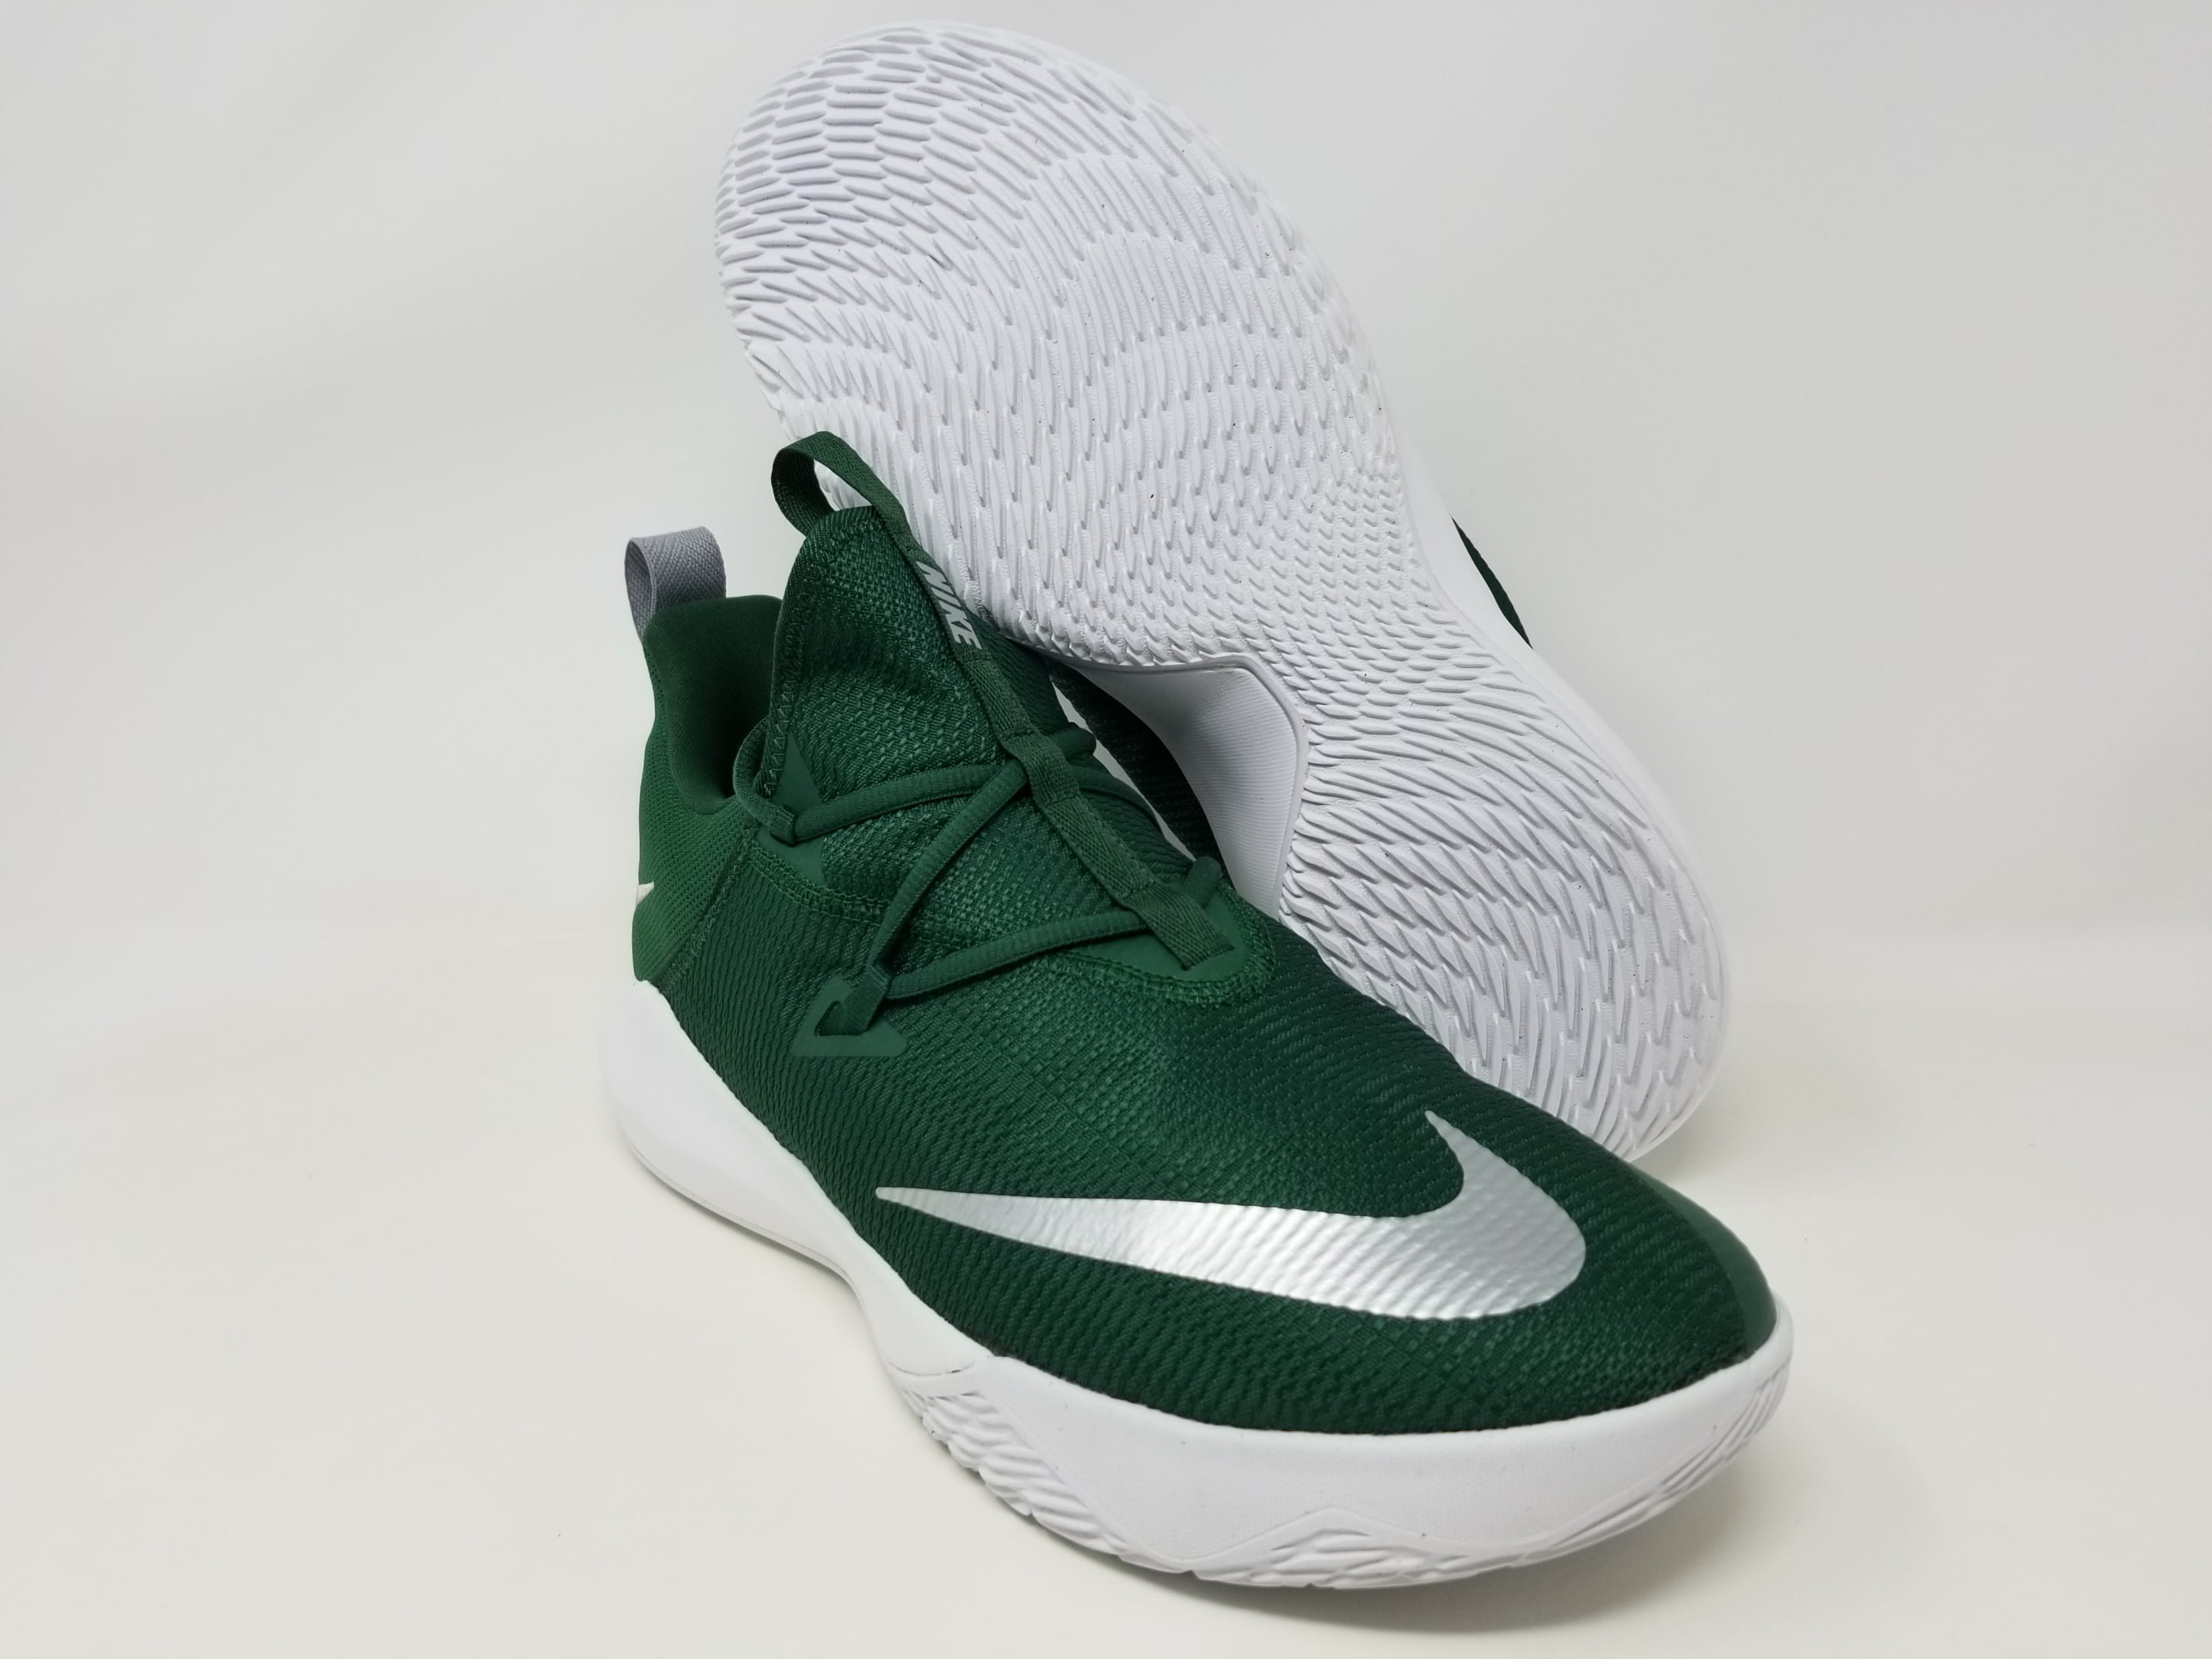 Nike Men's Zoom Shift 2 TB Basketball Shoes, Green/Silver, 15 D(M) US ماسح ضوئي سريع